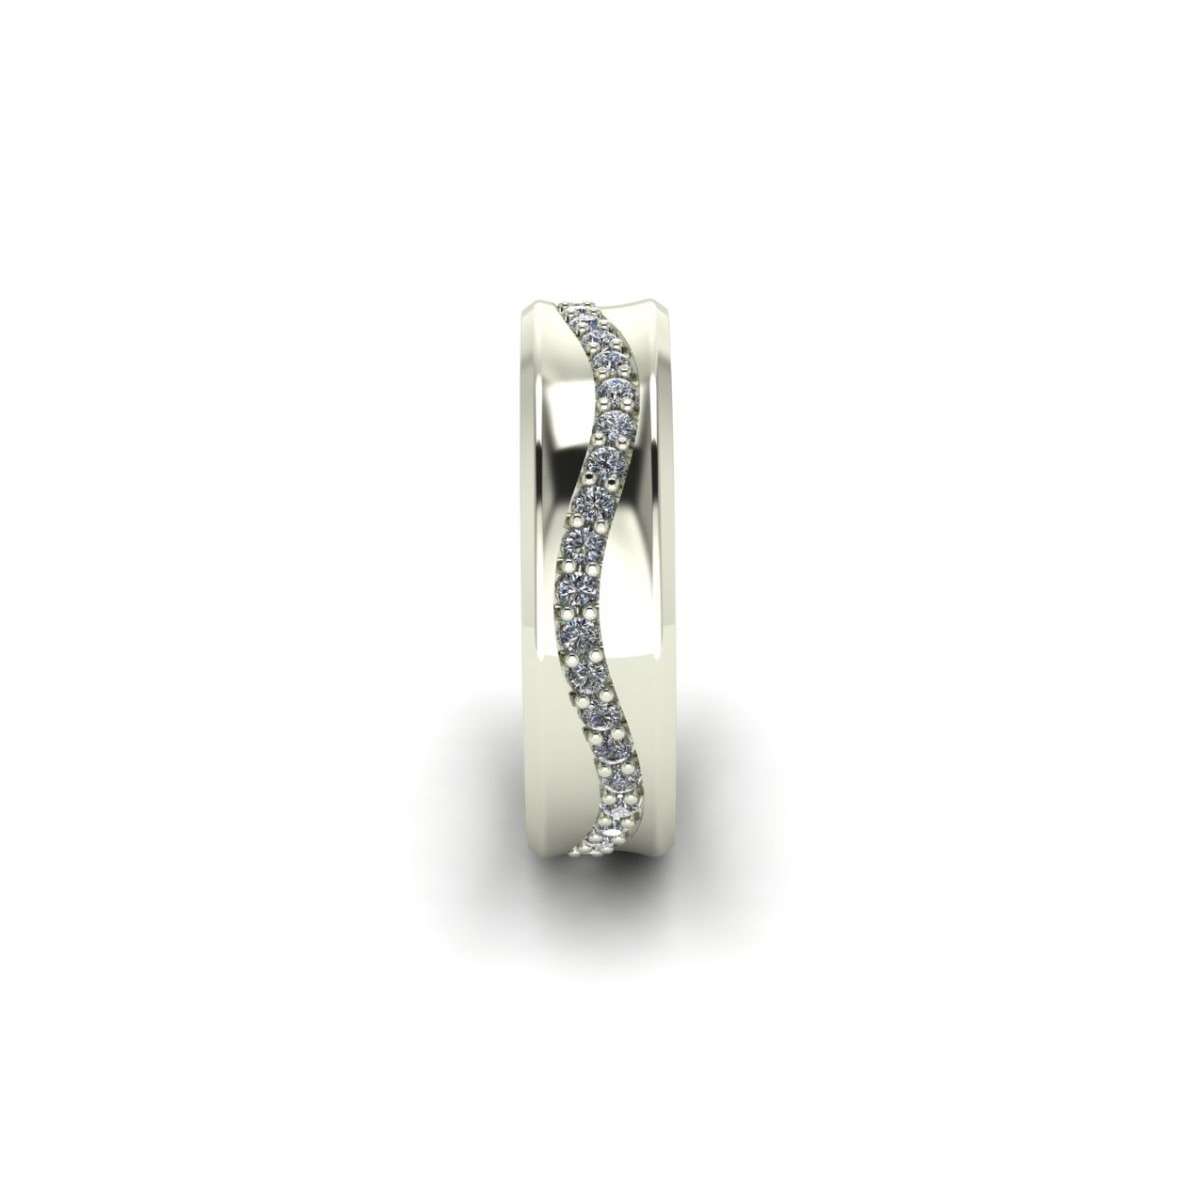 Ring white gold diamond wedding ring completely around 0.33 g-carat vs1